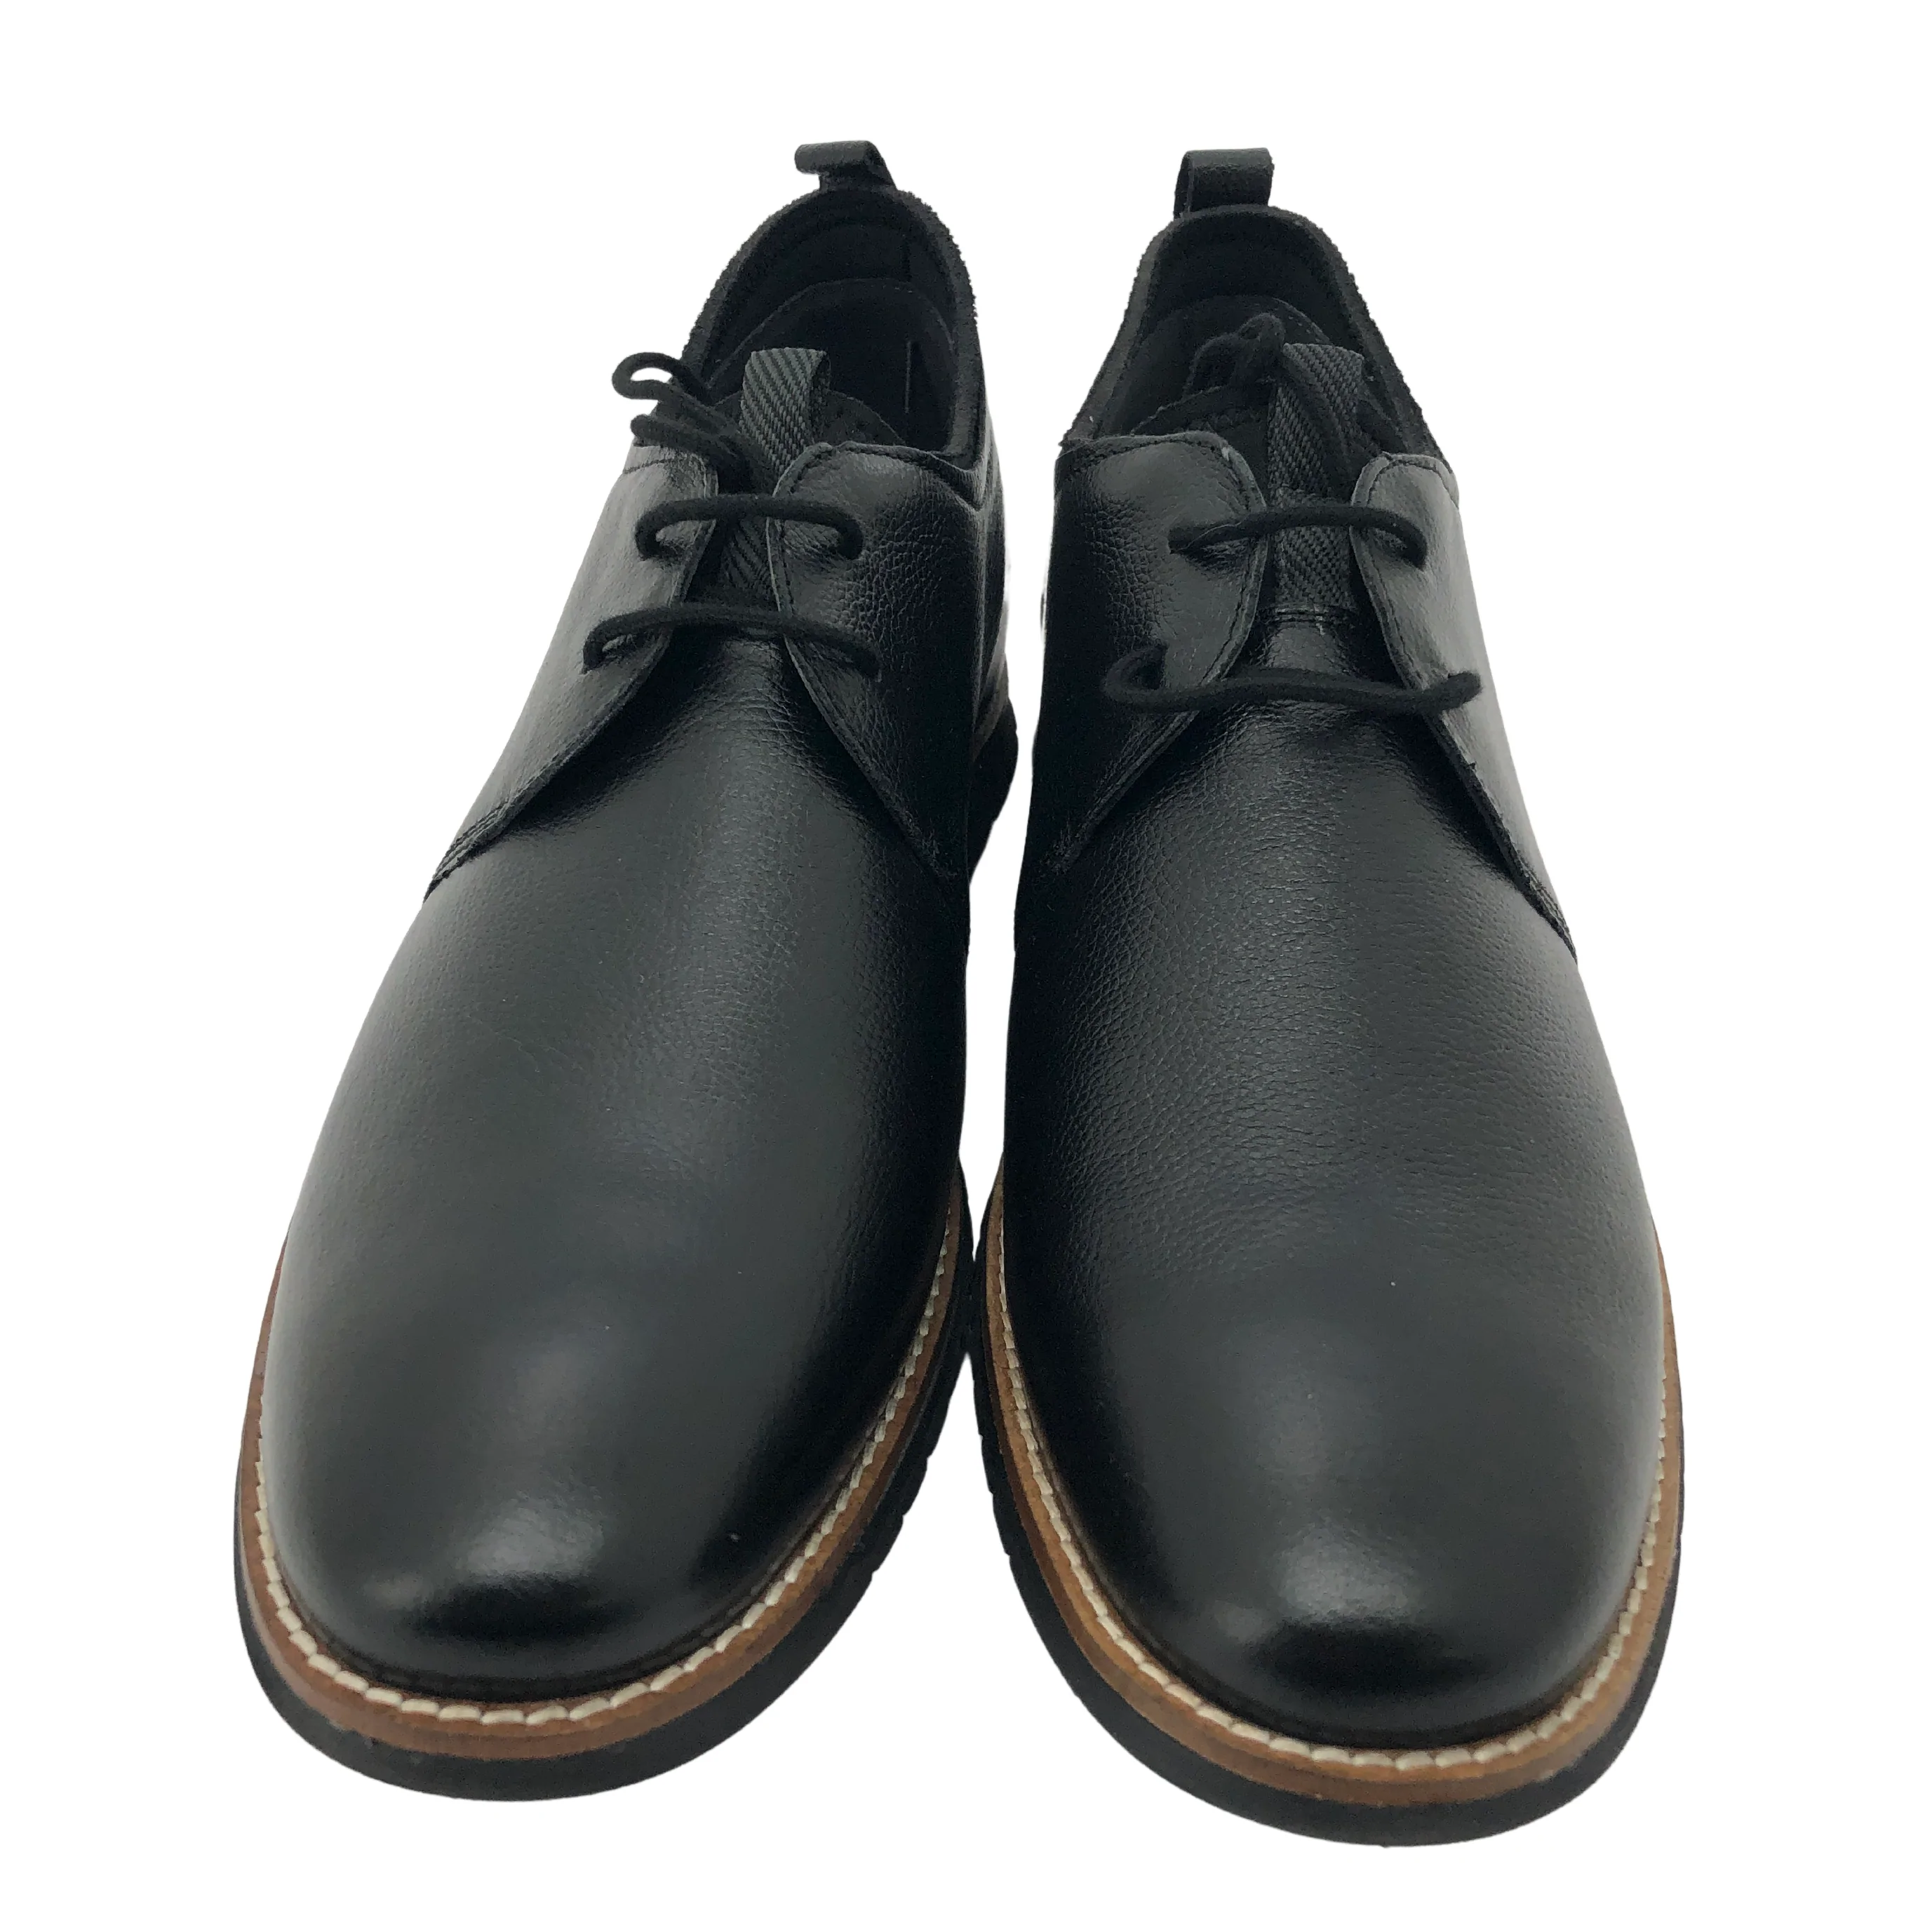 Hush Puppies Men's Dress Shoe / Oxford / Black / Size 13